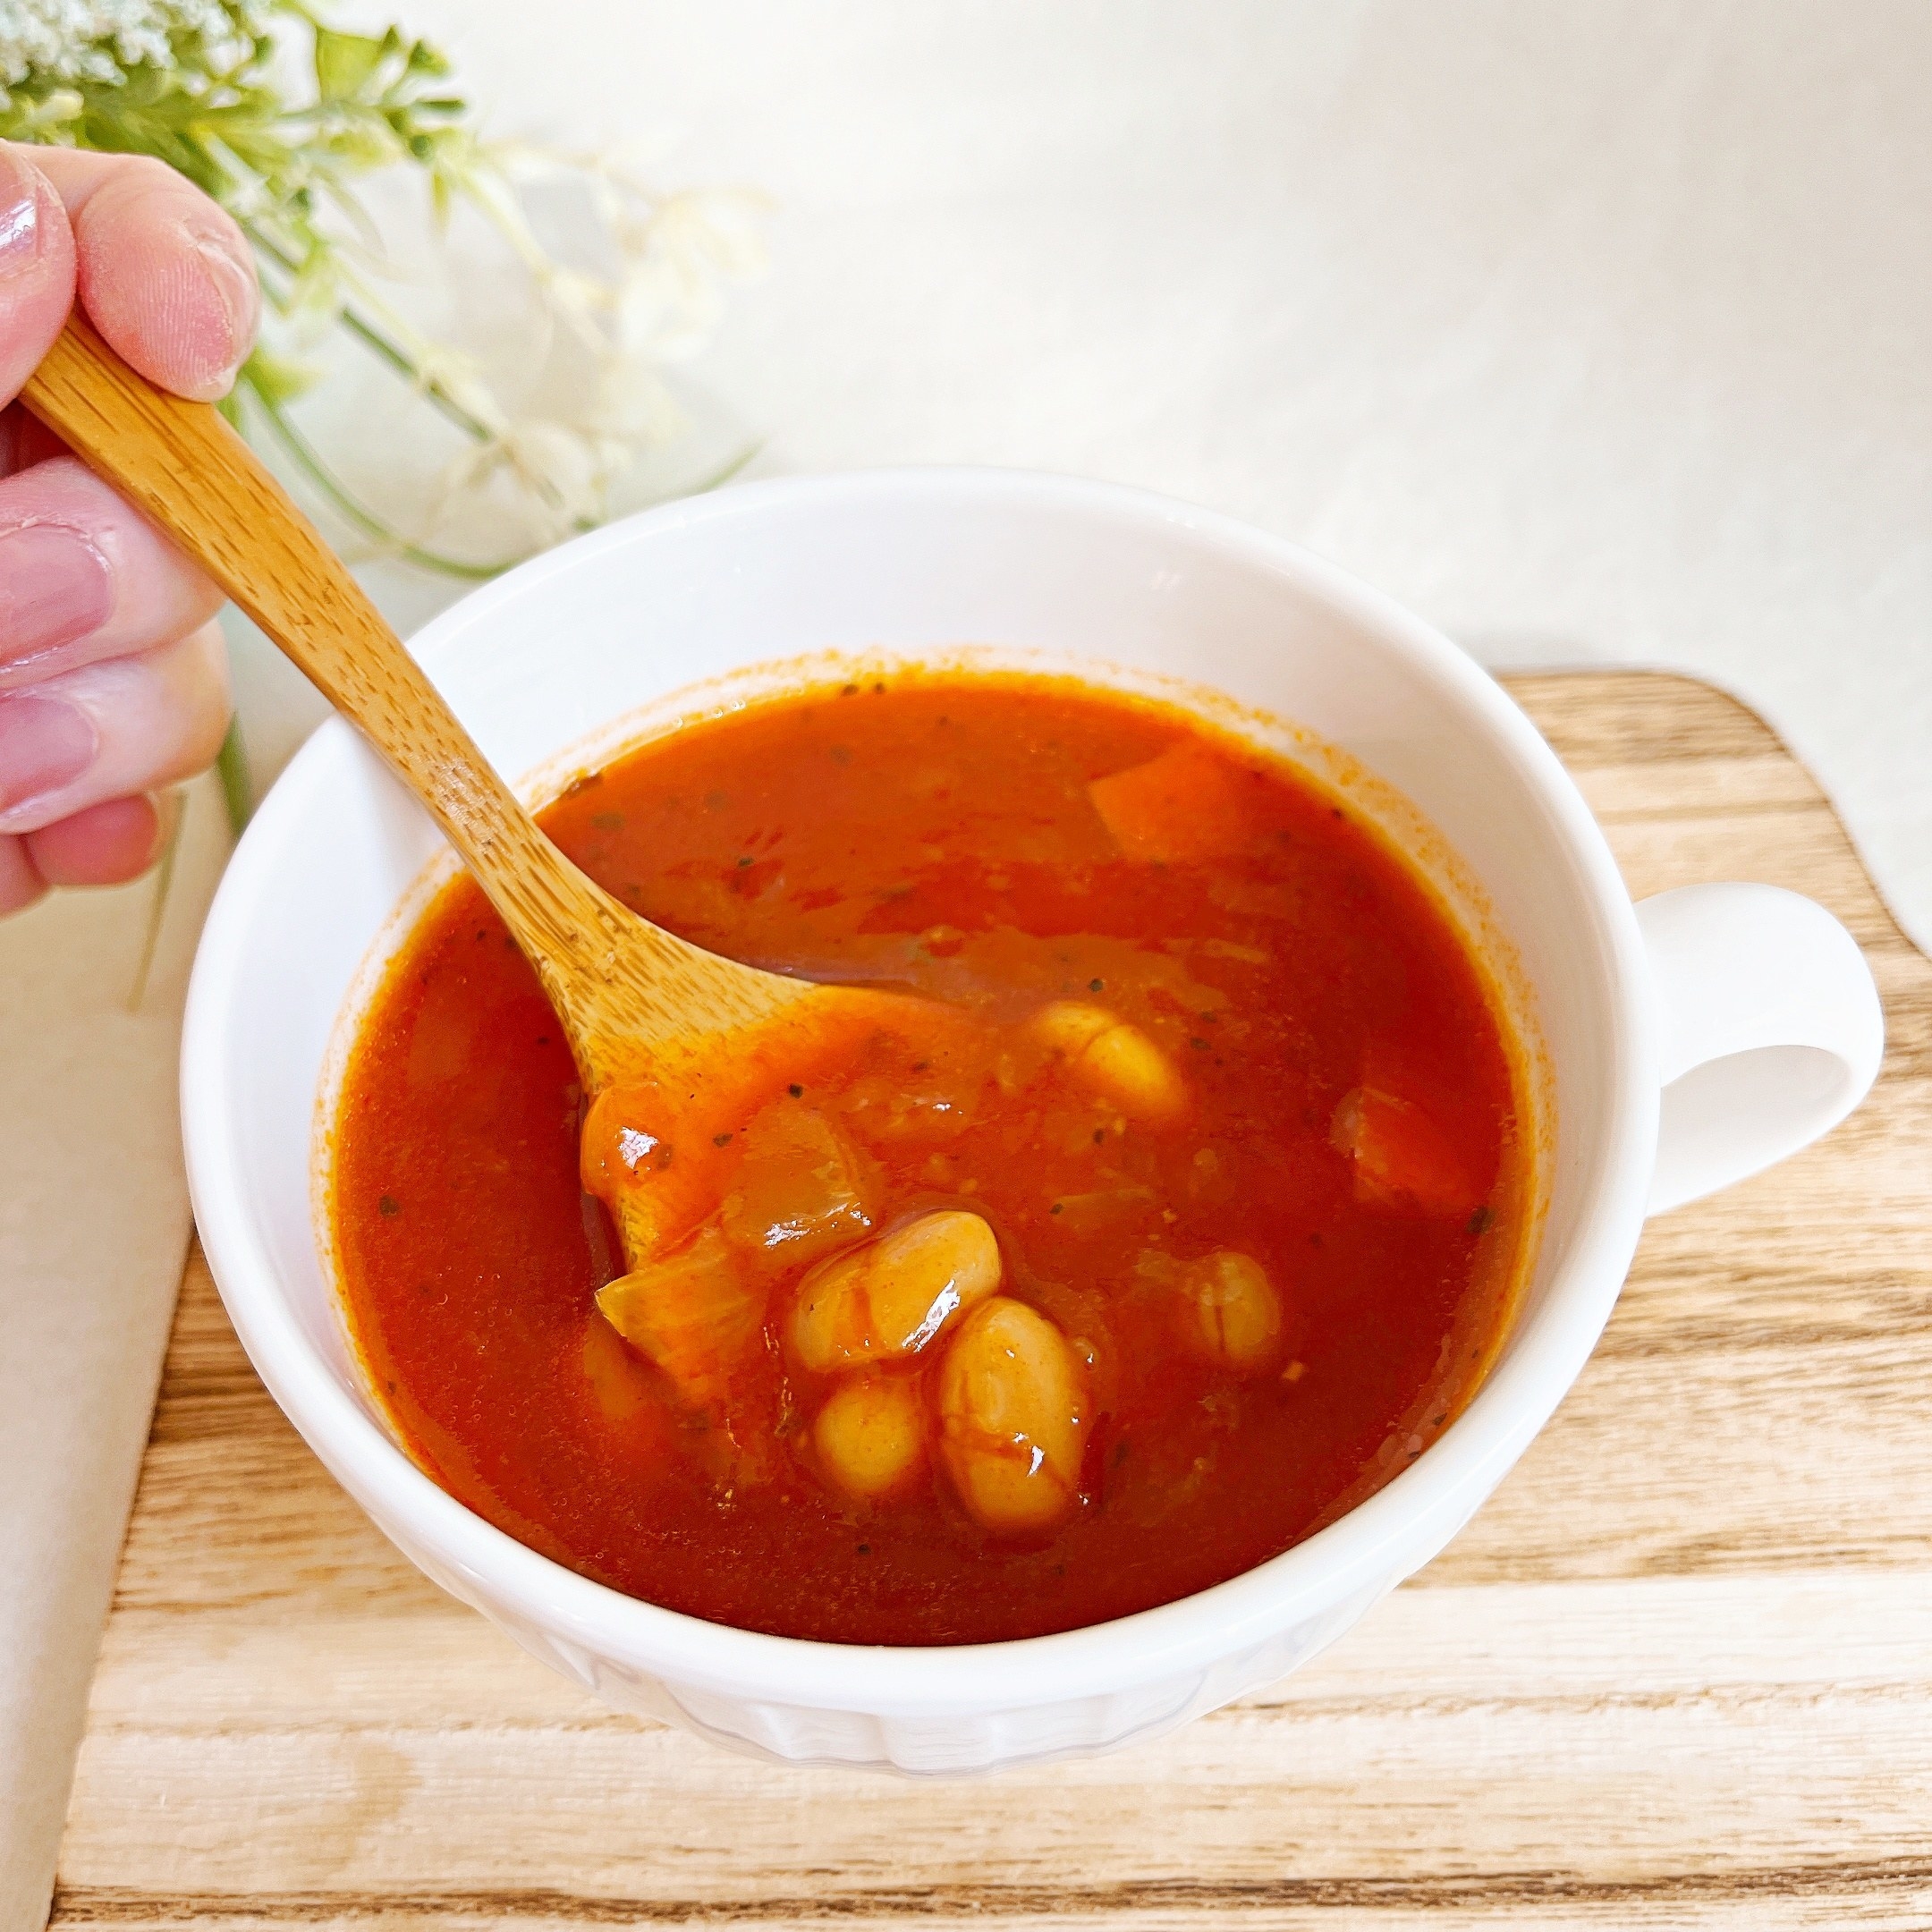 KALDIおすすめのスープ「バジル香る具だくさん ミネストローネ」